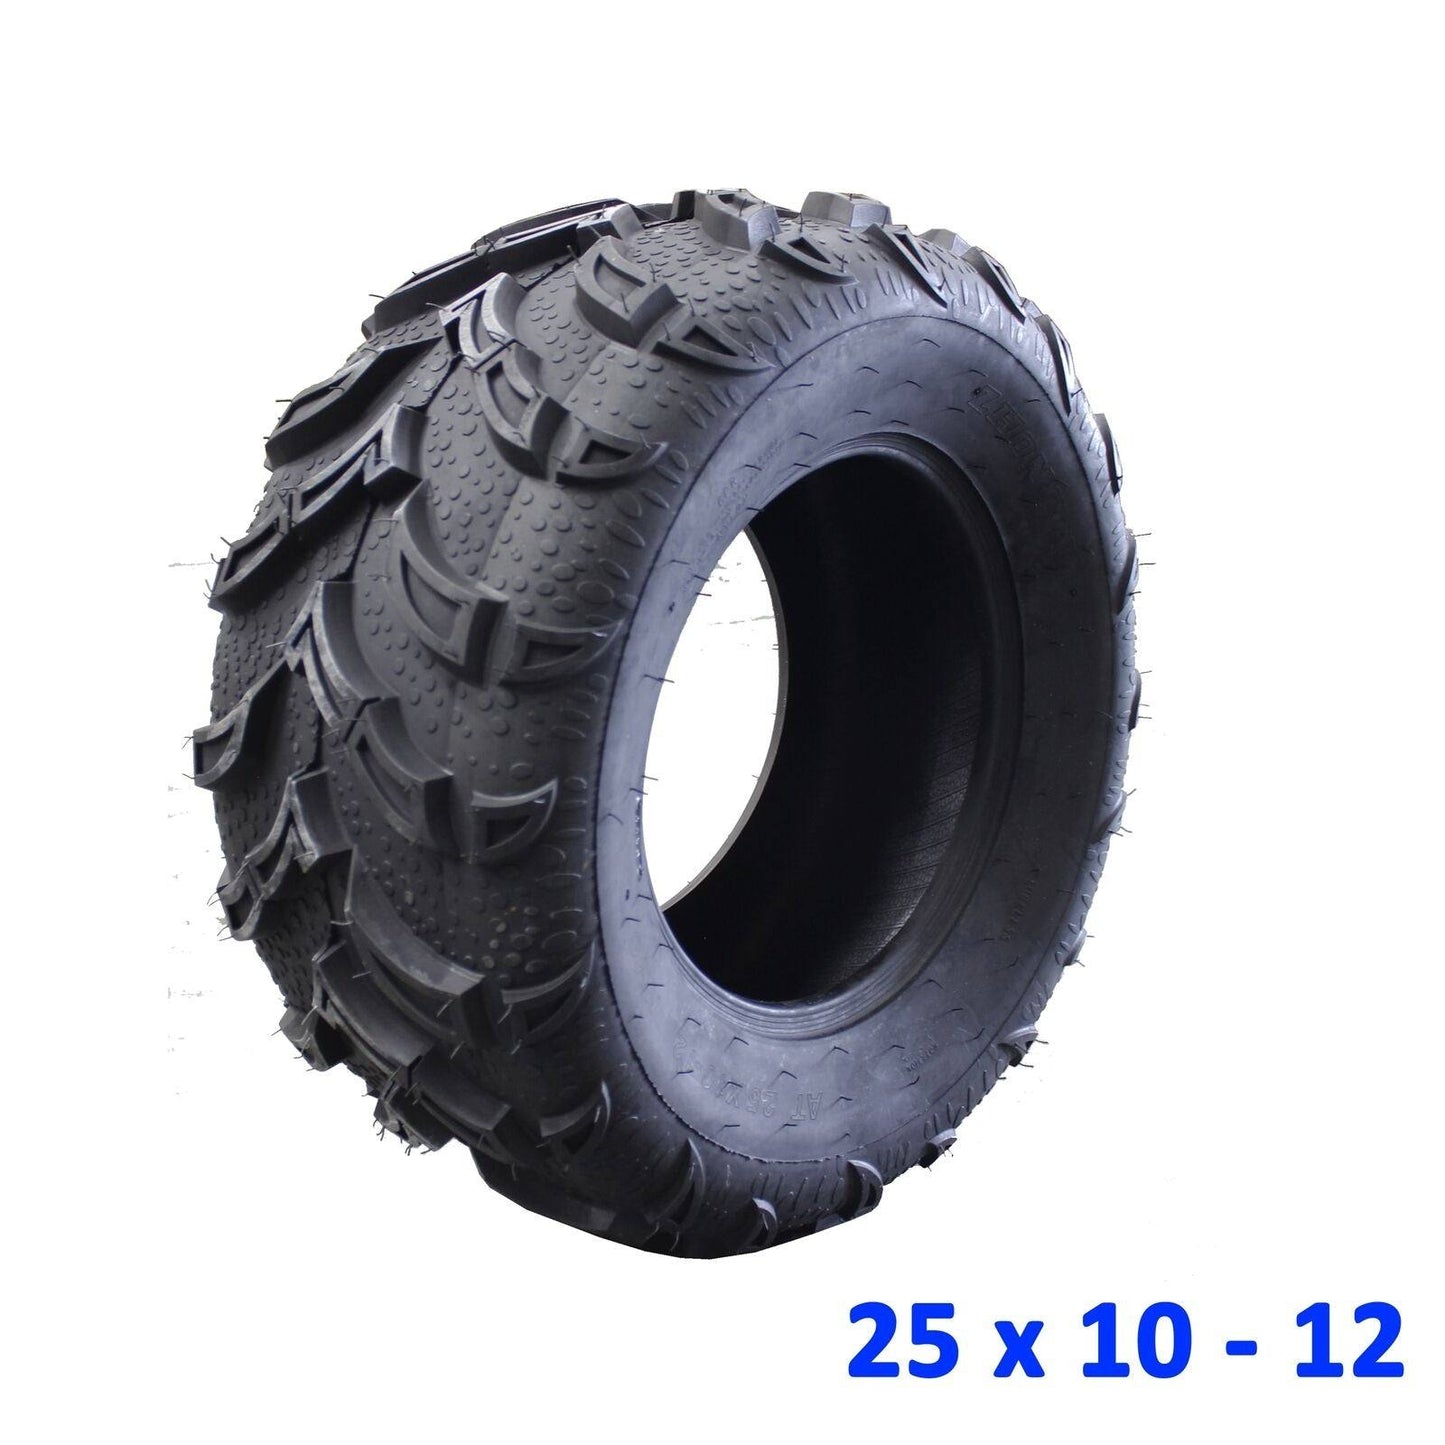 2pcs 25x10-12 Tyres Tires 12 Inch For ATV Quad Buggy Off Road Farm Bike 6 Ply - TDRMOTO